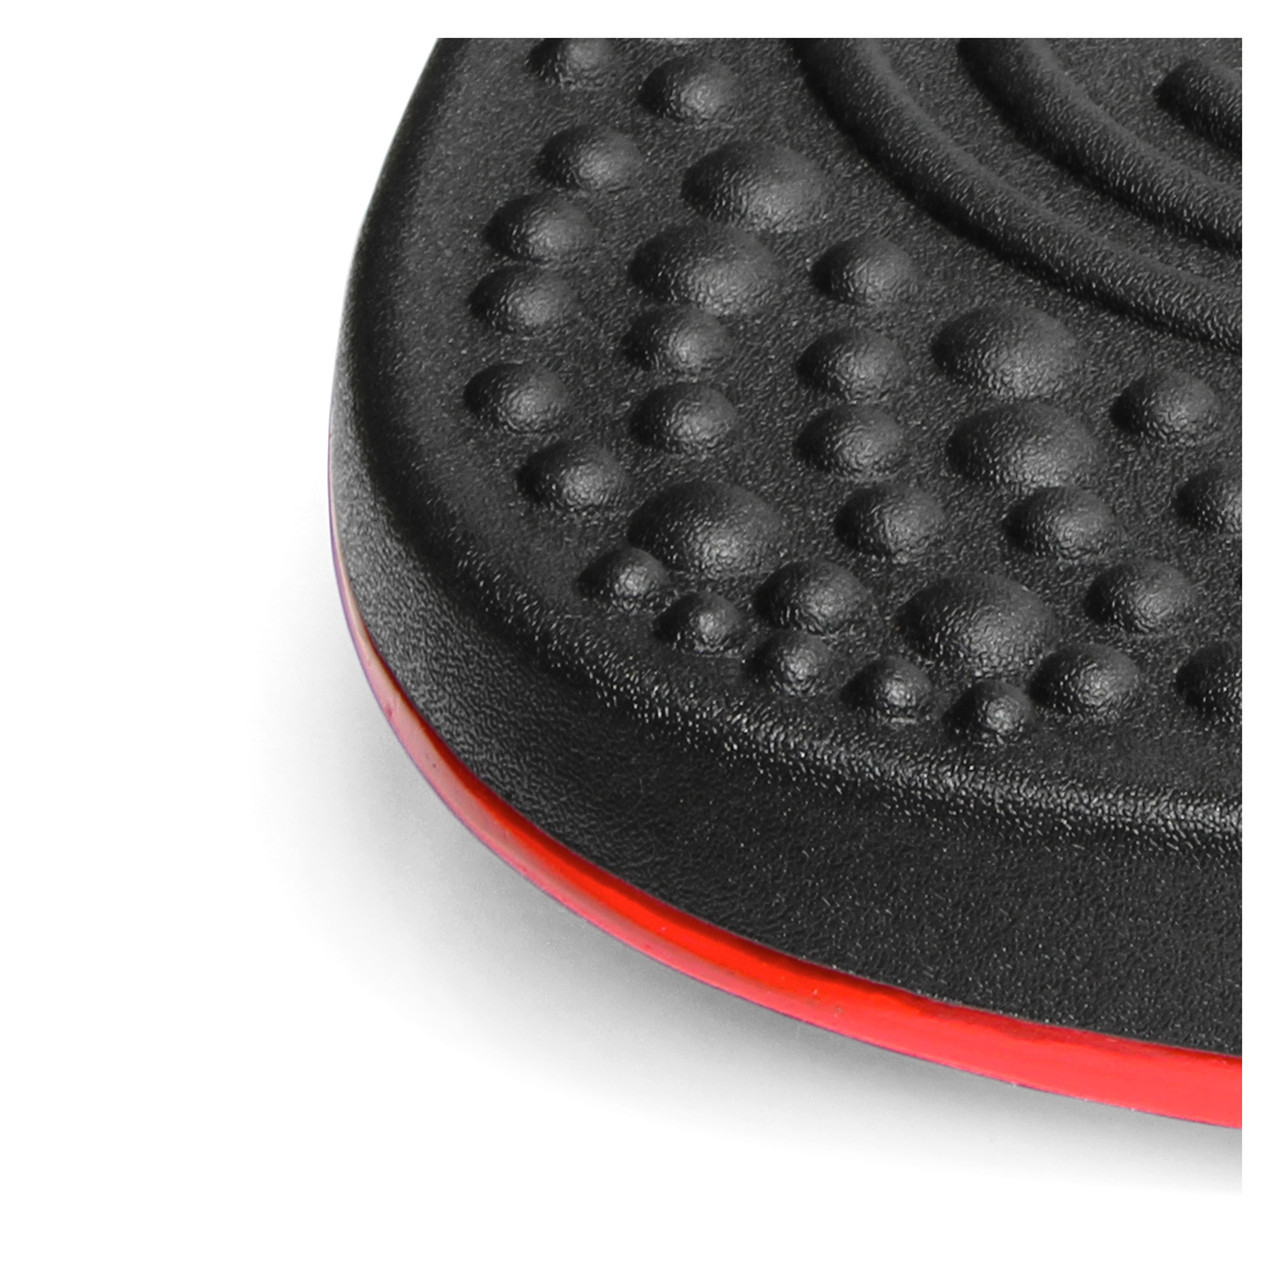 AFS-TEX Active Standing Platform | Premium Anti-Fatigue Comfort Mat With  Foot Massage Roller Balls for Standing Desks